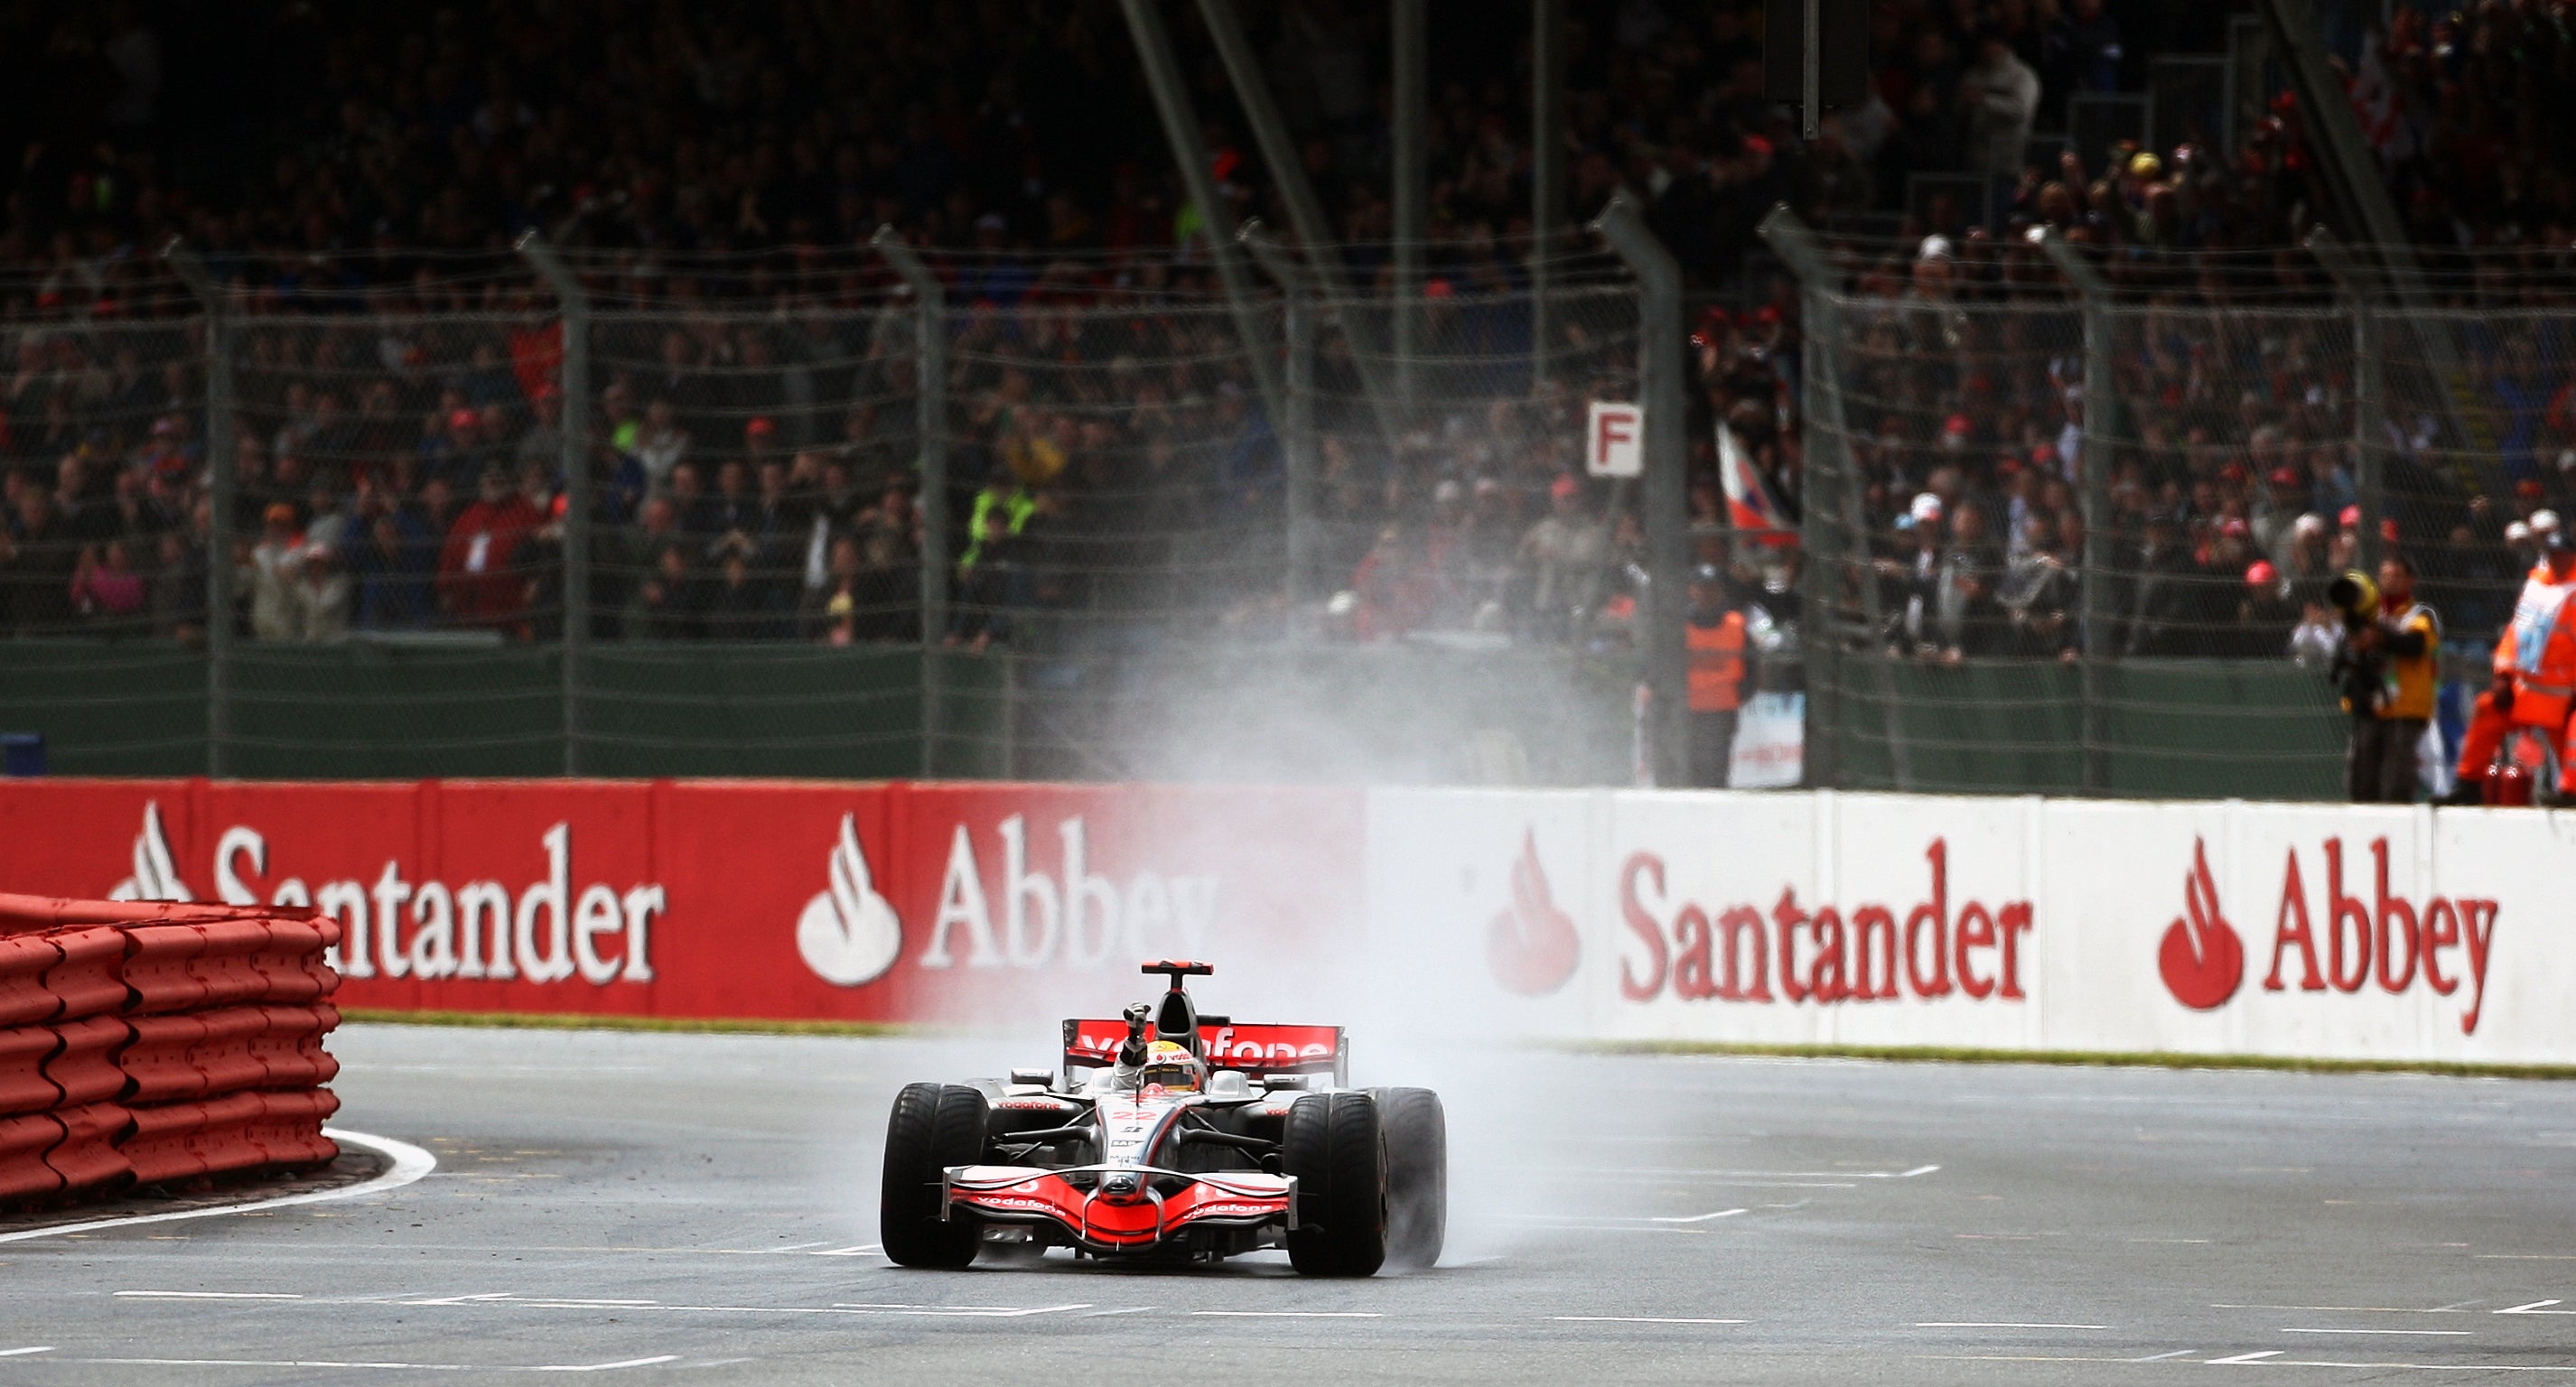 McLaren’s Lewis Hamilton on the last corner prior to taking the chequered flag to win the British Grand Prix at Silverstone (David Davies/PA)